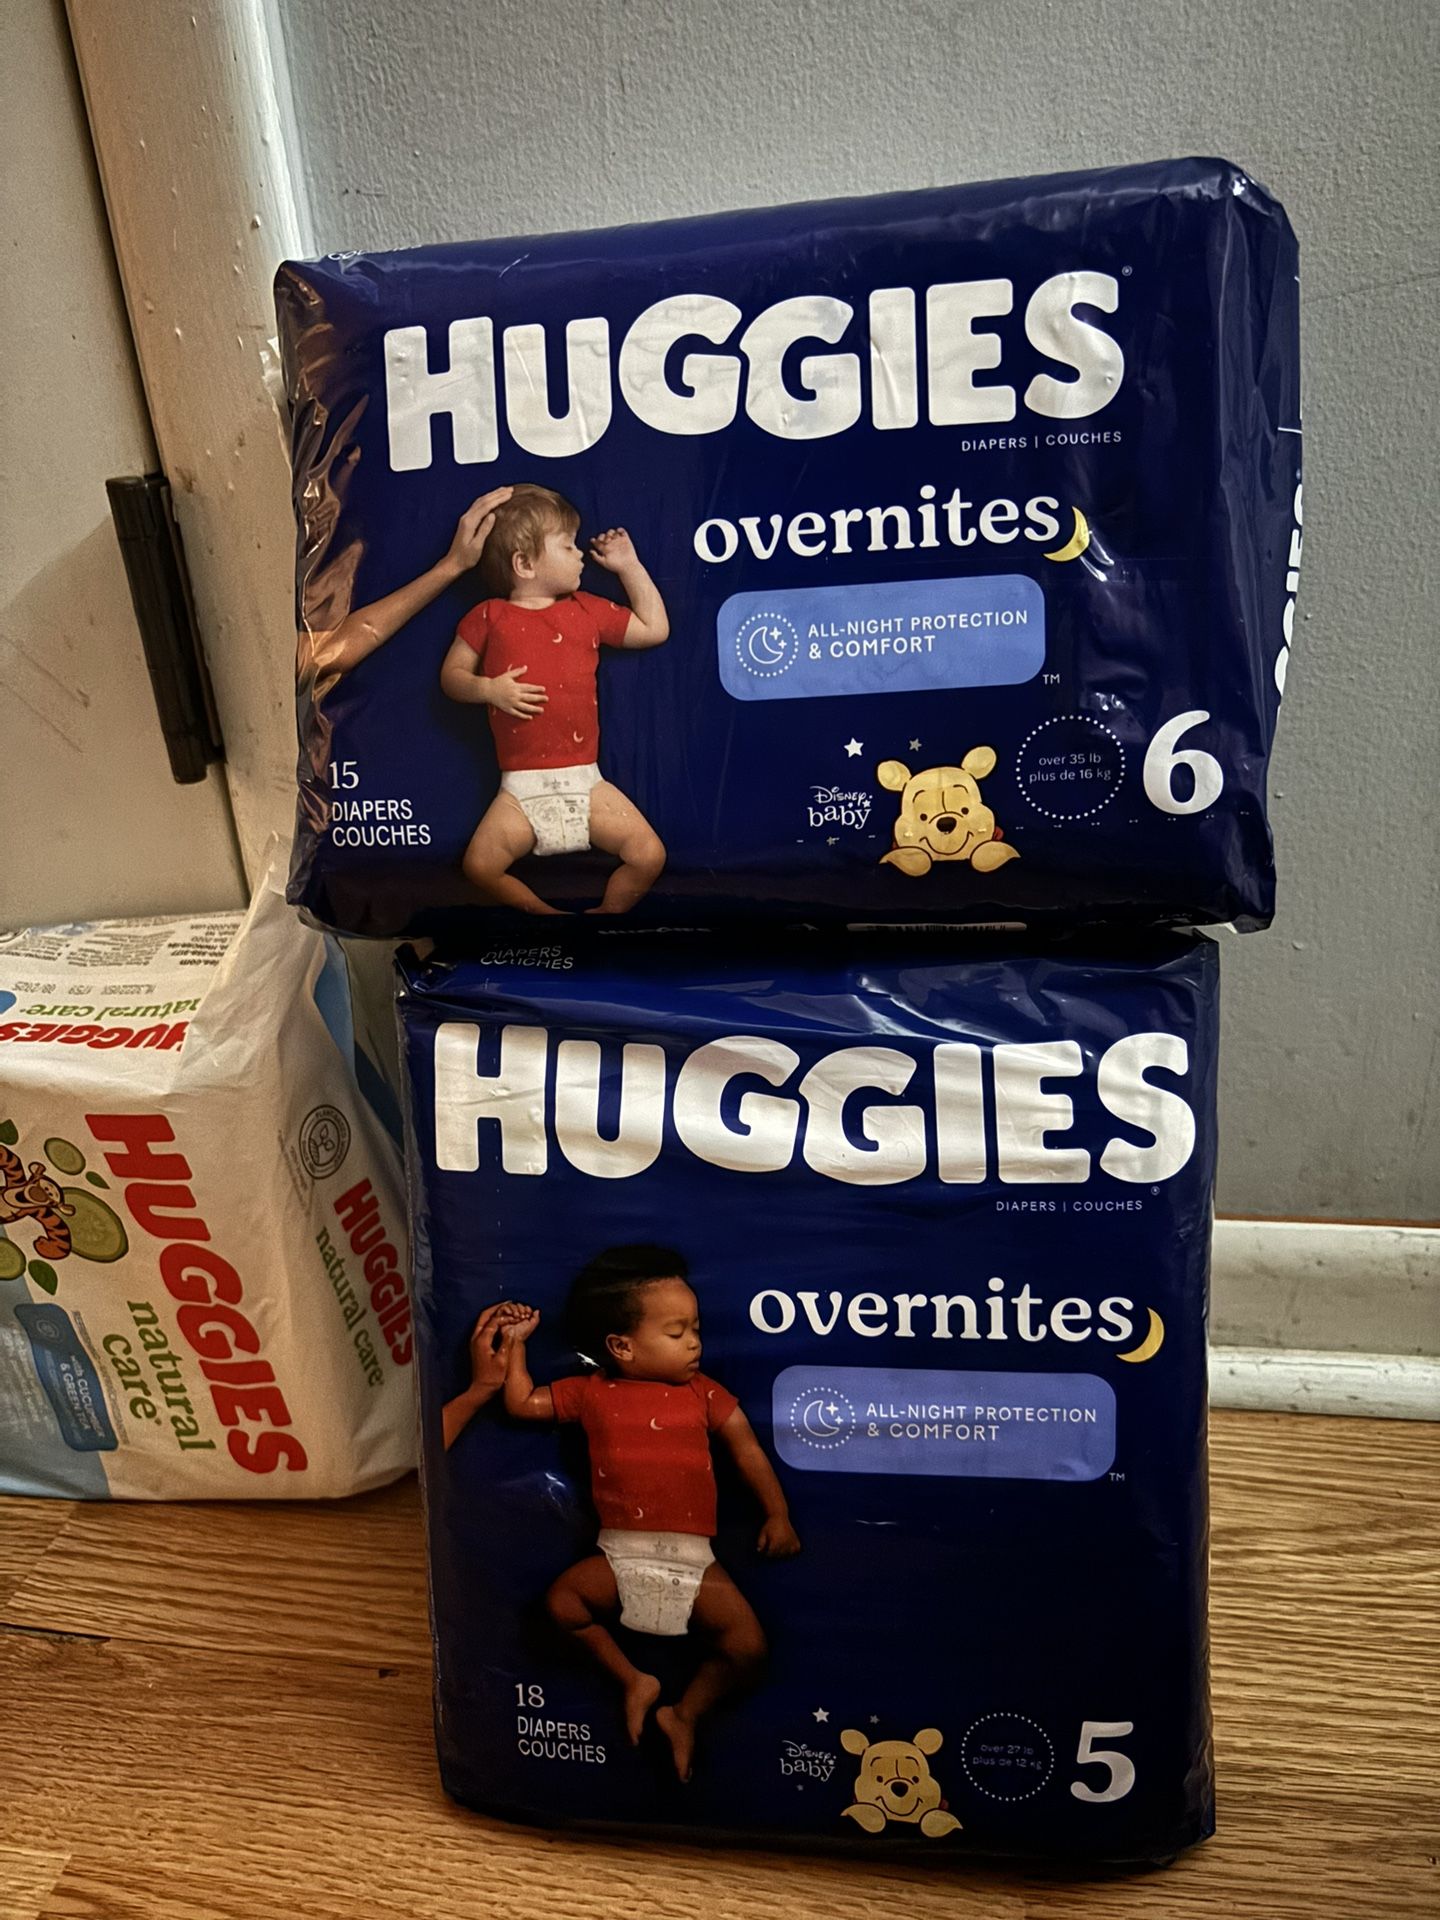 Huggies Over nite diapers 